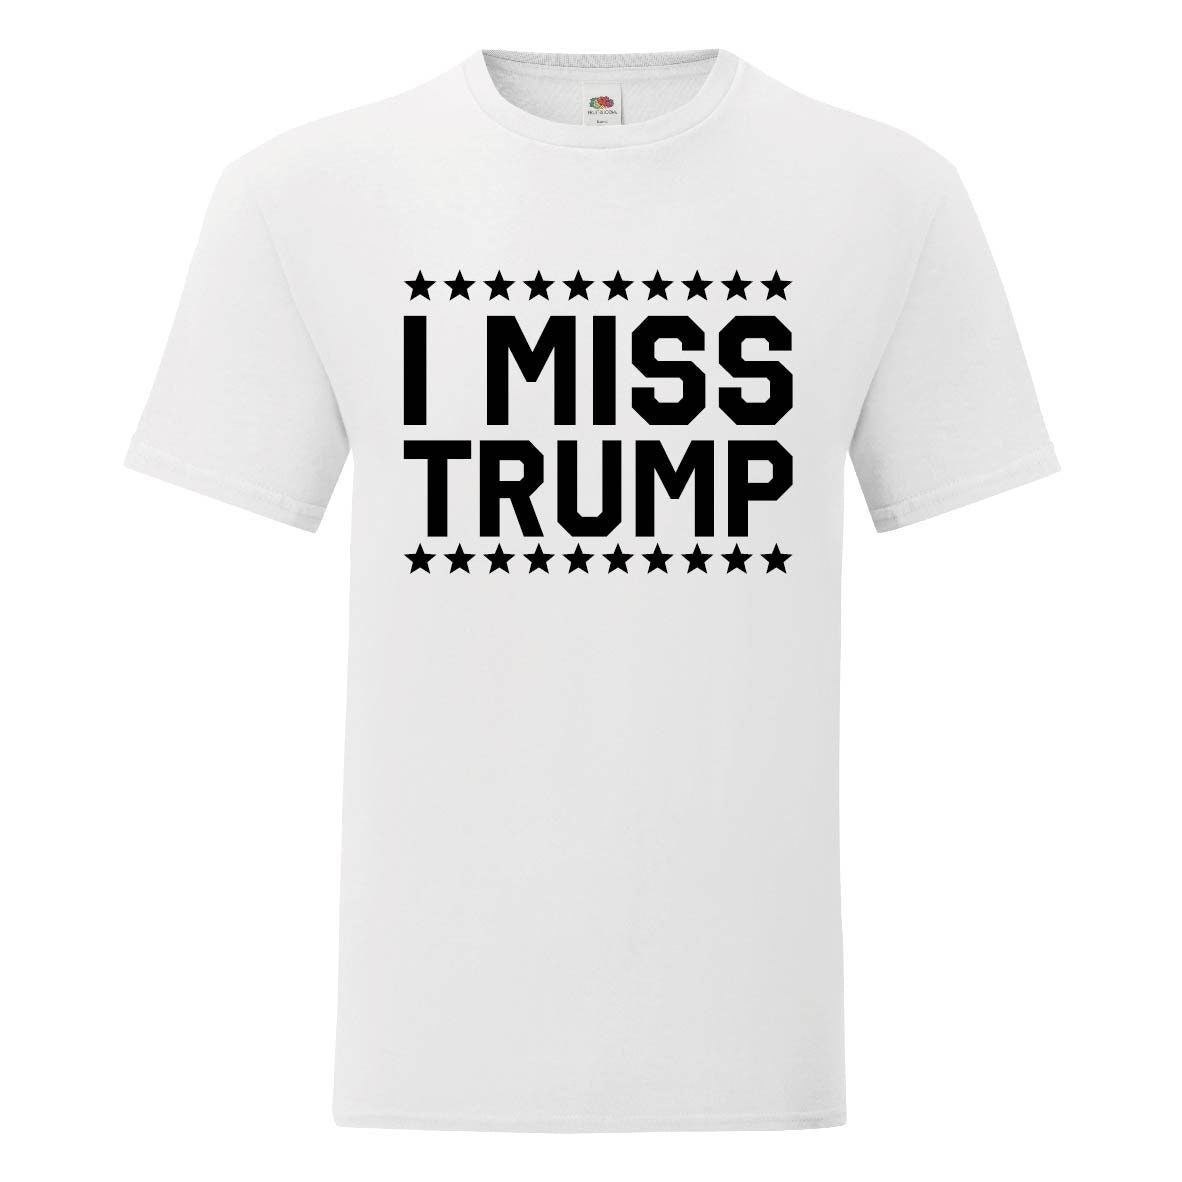 I Miss Trump T-Shirt - Mens and Womens, USA, America